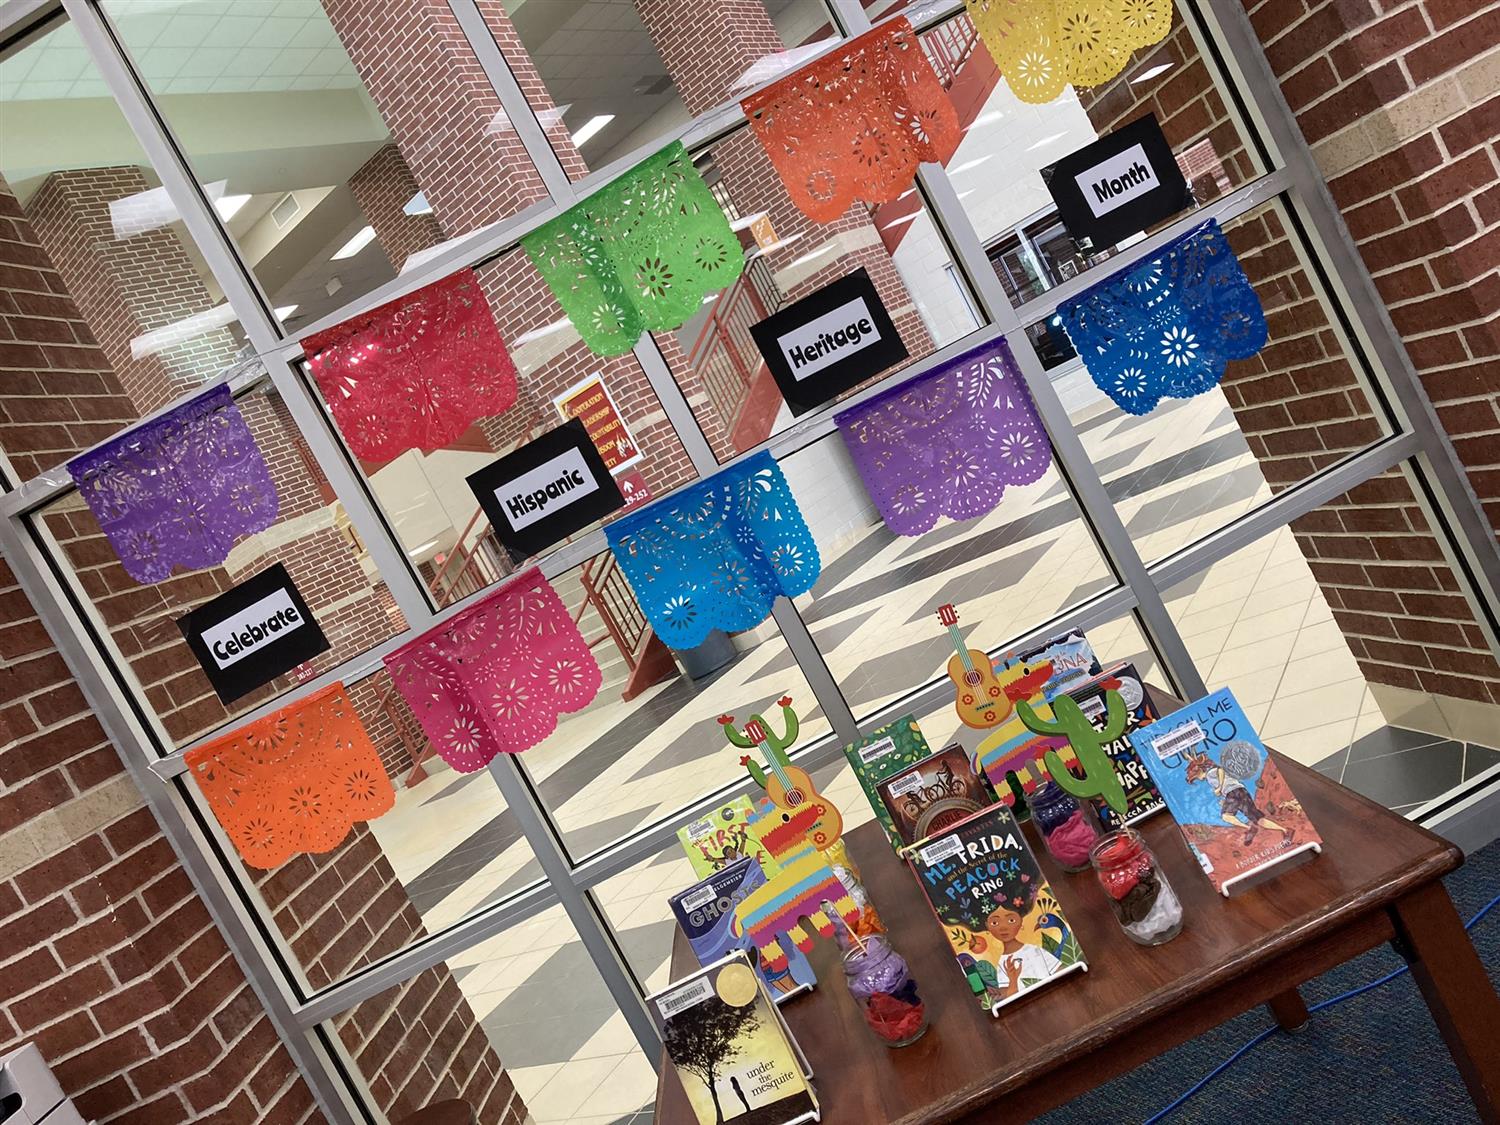 Hispanic Heritage Month library display